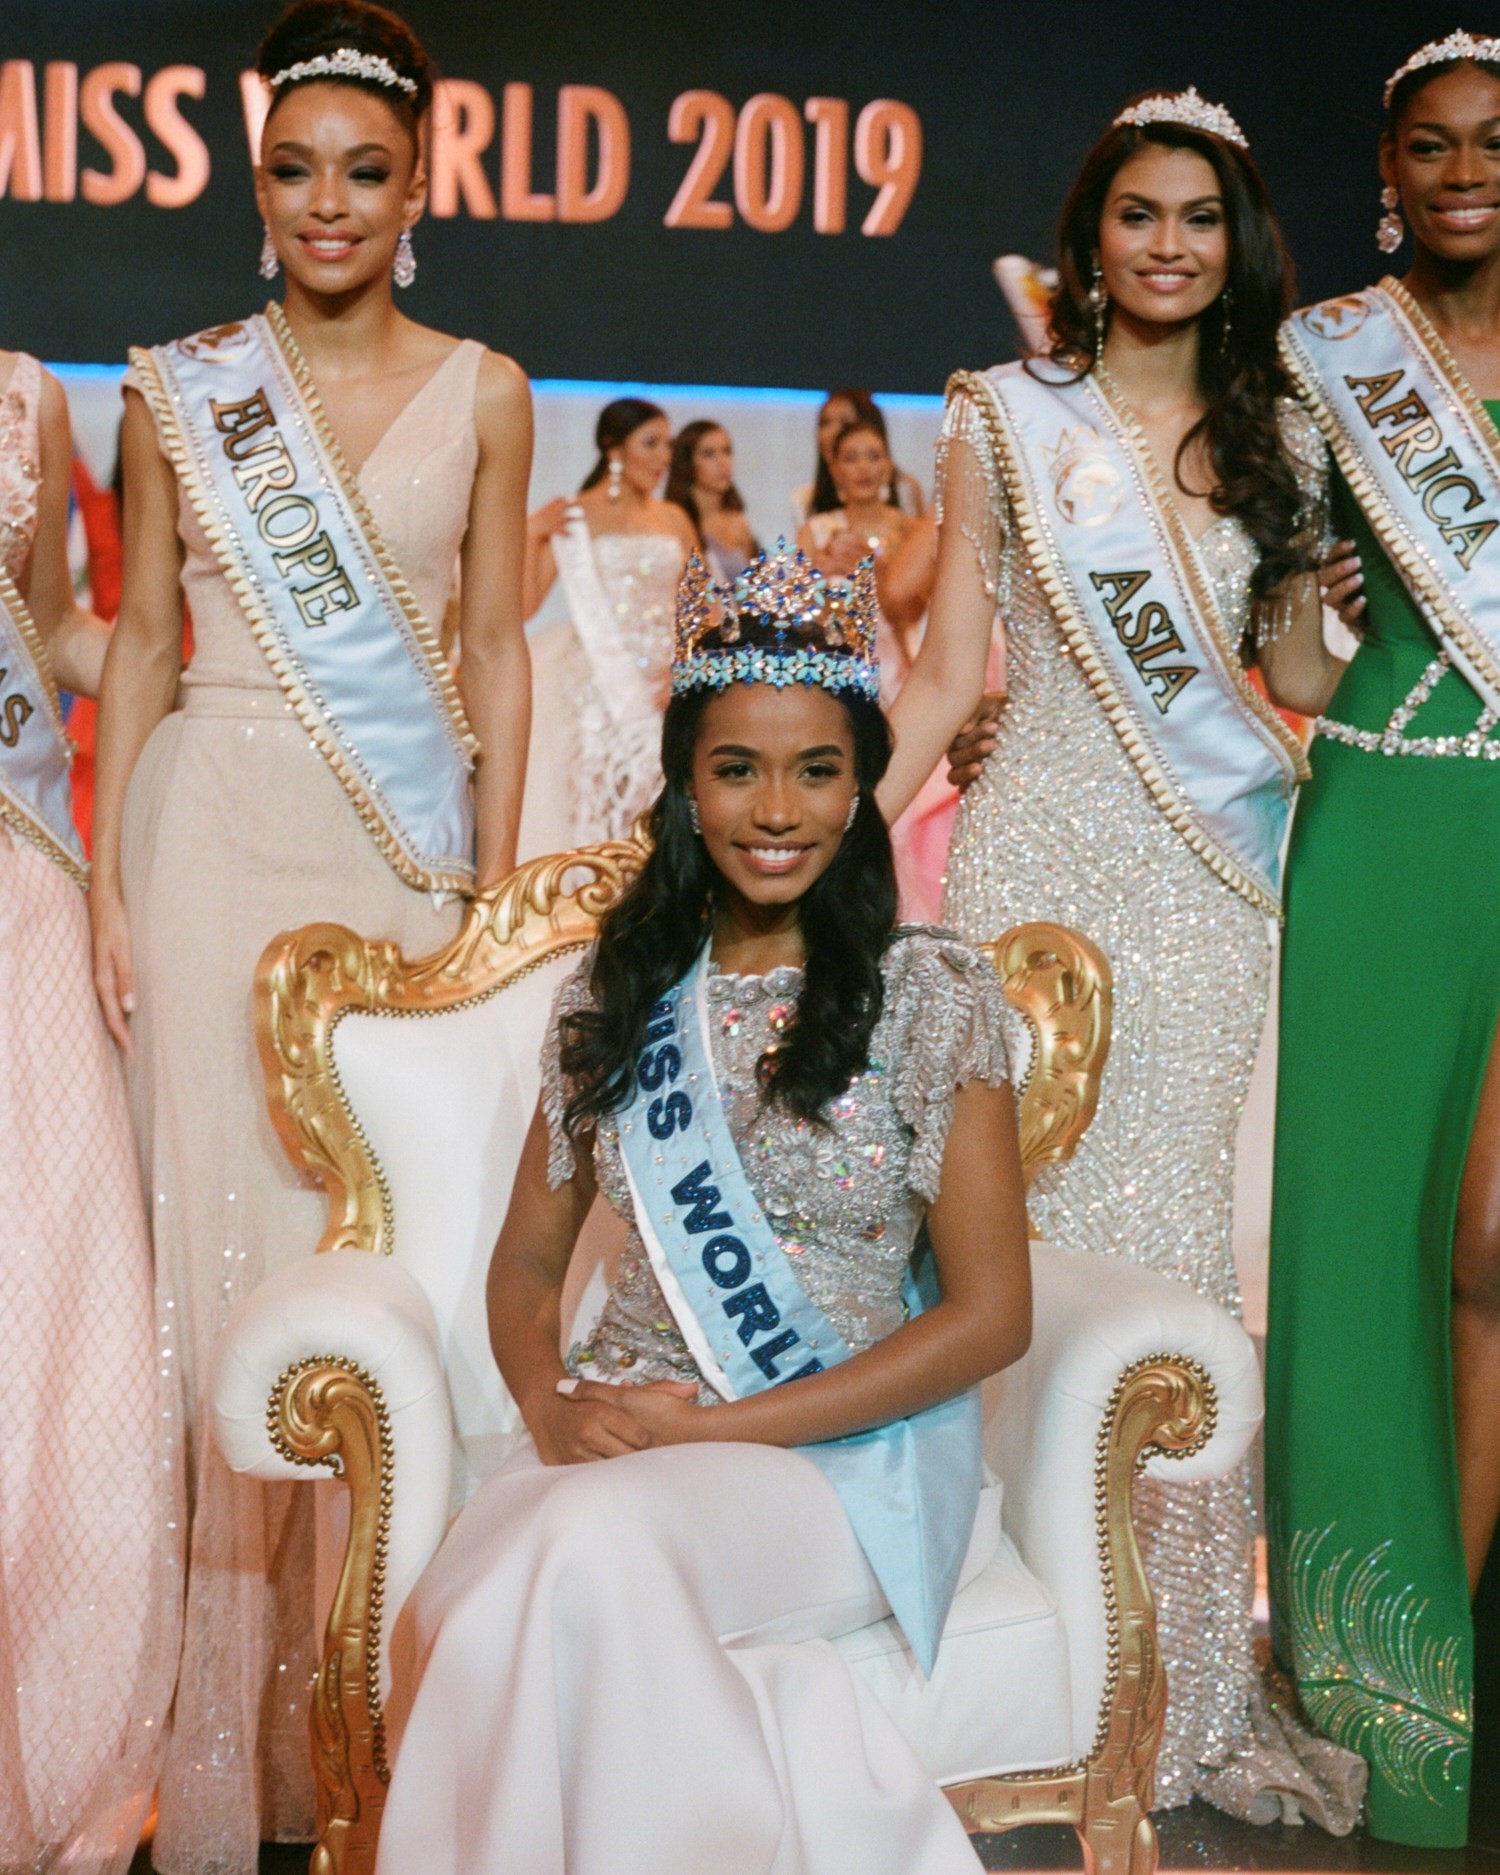 Miss World 2019 winner Toni-Ann Singh from Jamaica